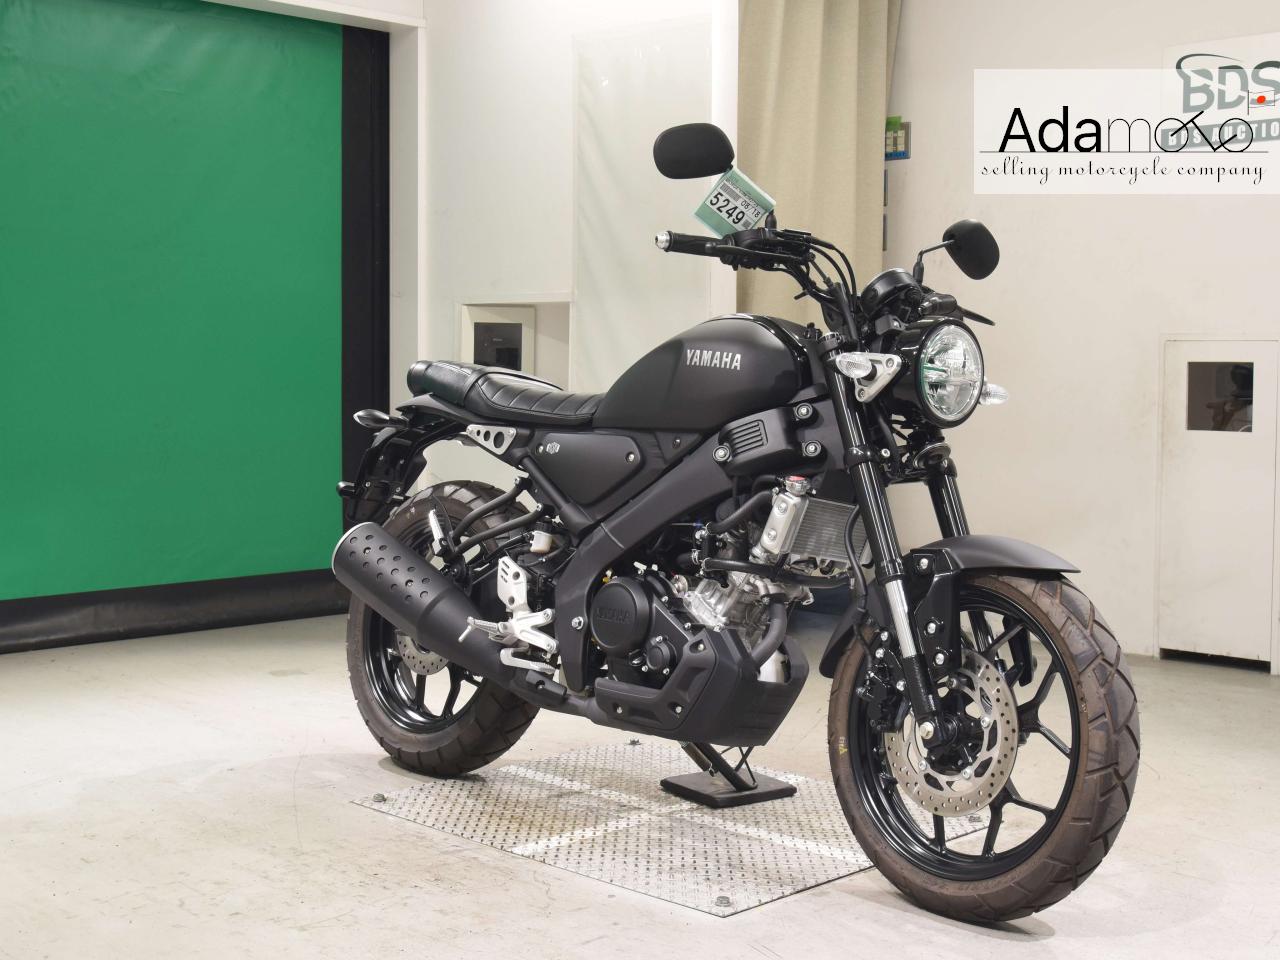 Yamaha XSR155 - Adamoto - Motorcycles from Japan